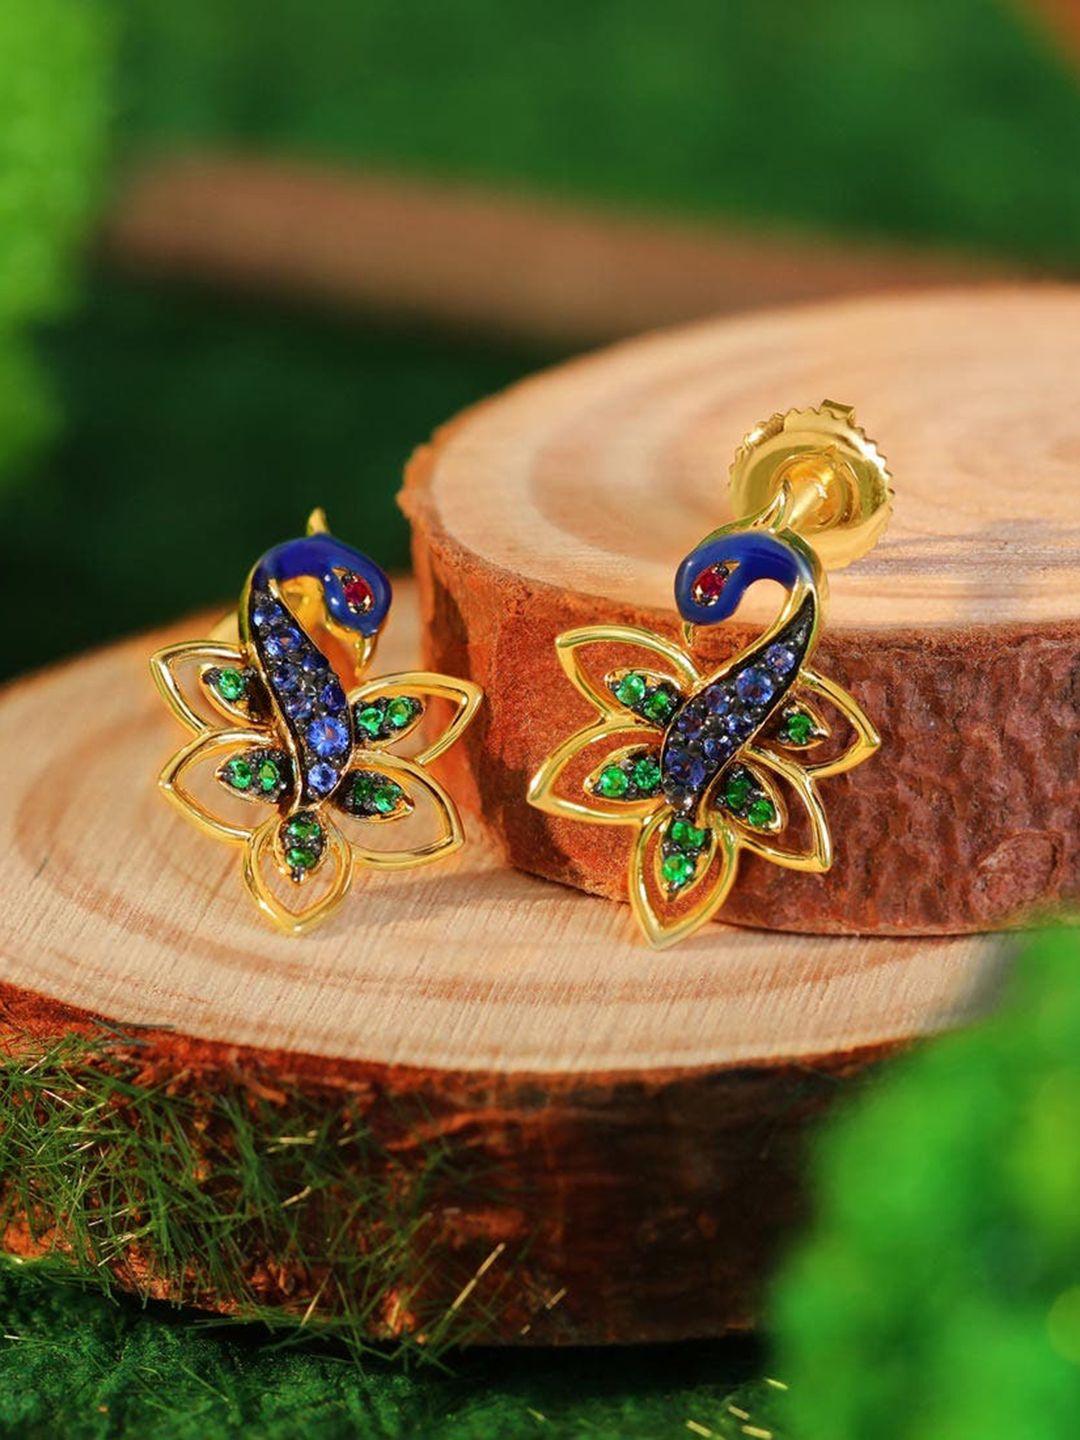 candere a kalyan jewellers company 18kt bis hallmark gold & gemstone earrings-3.24